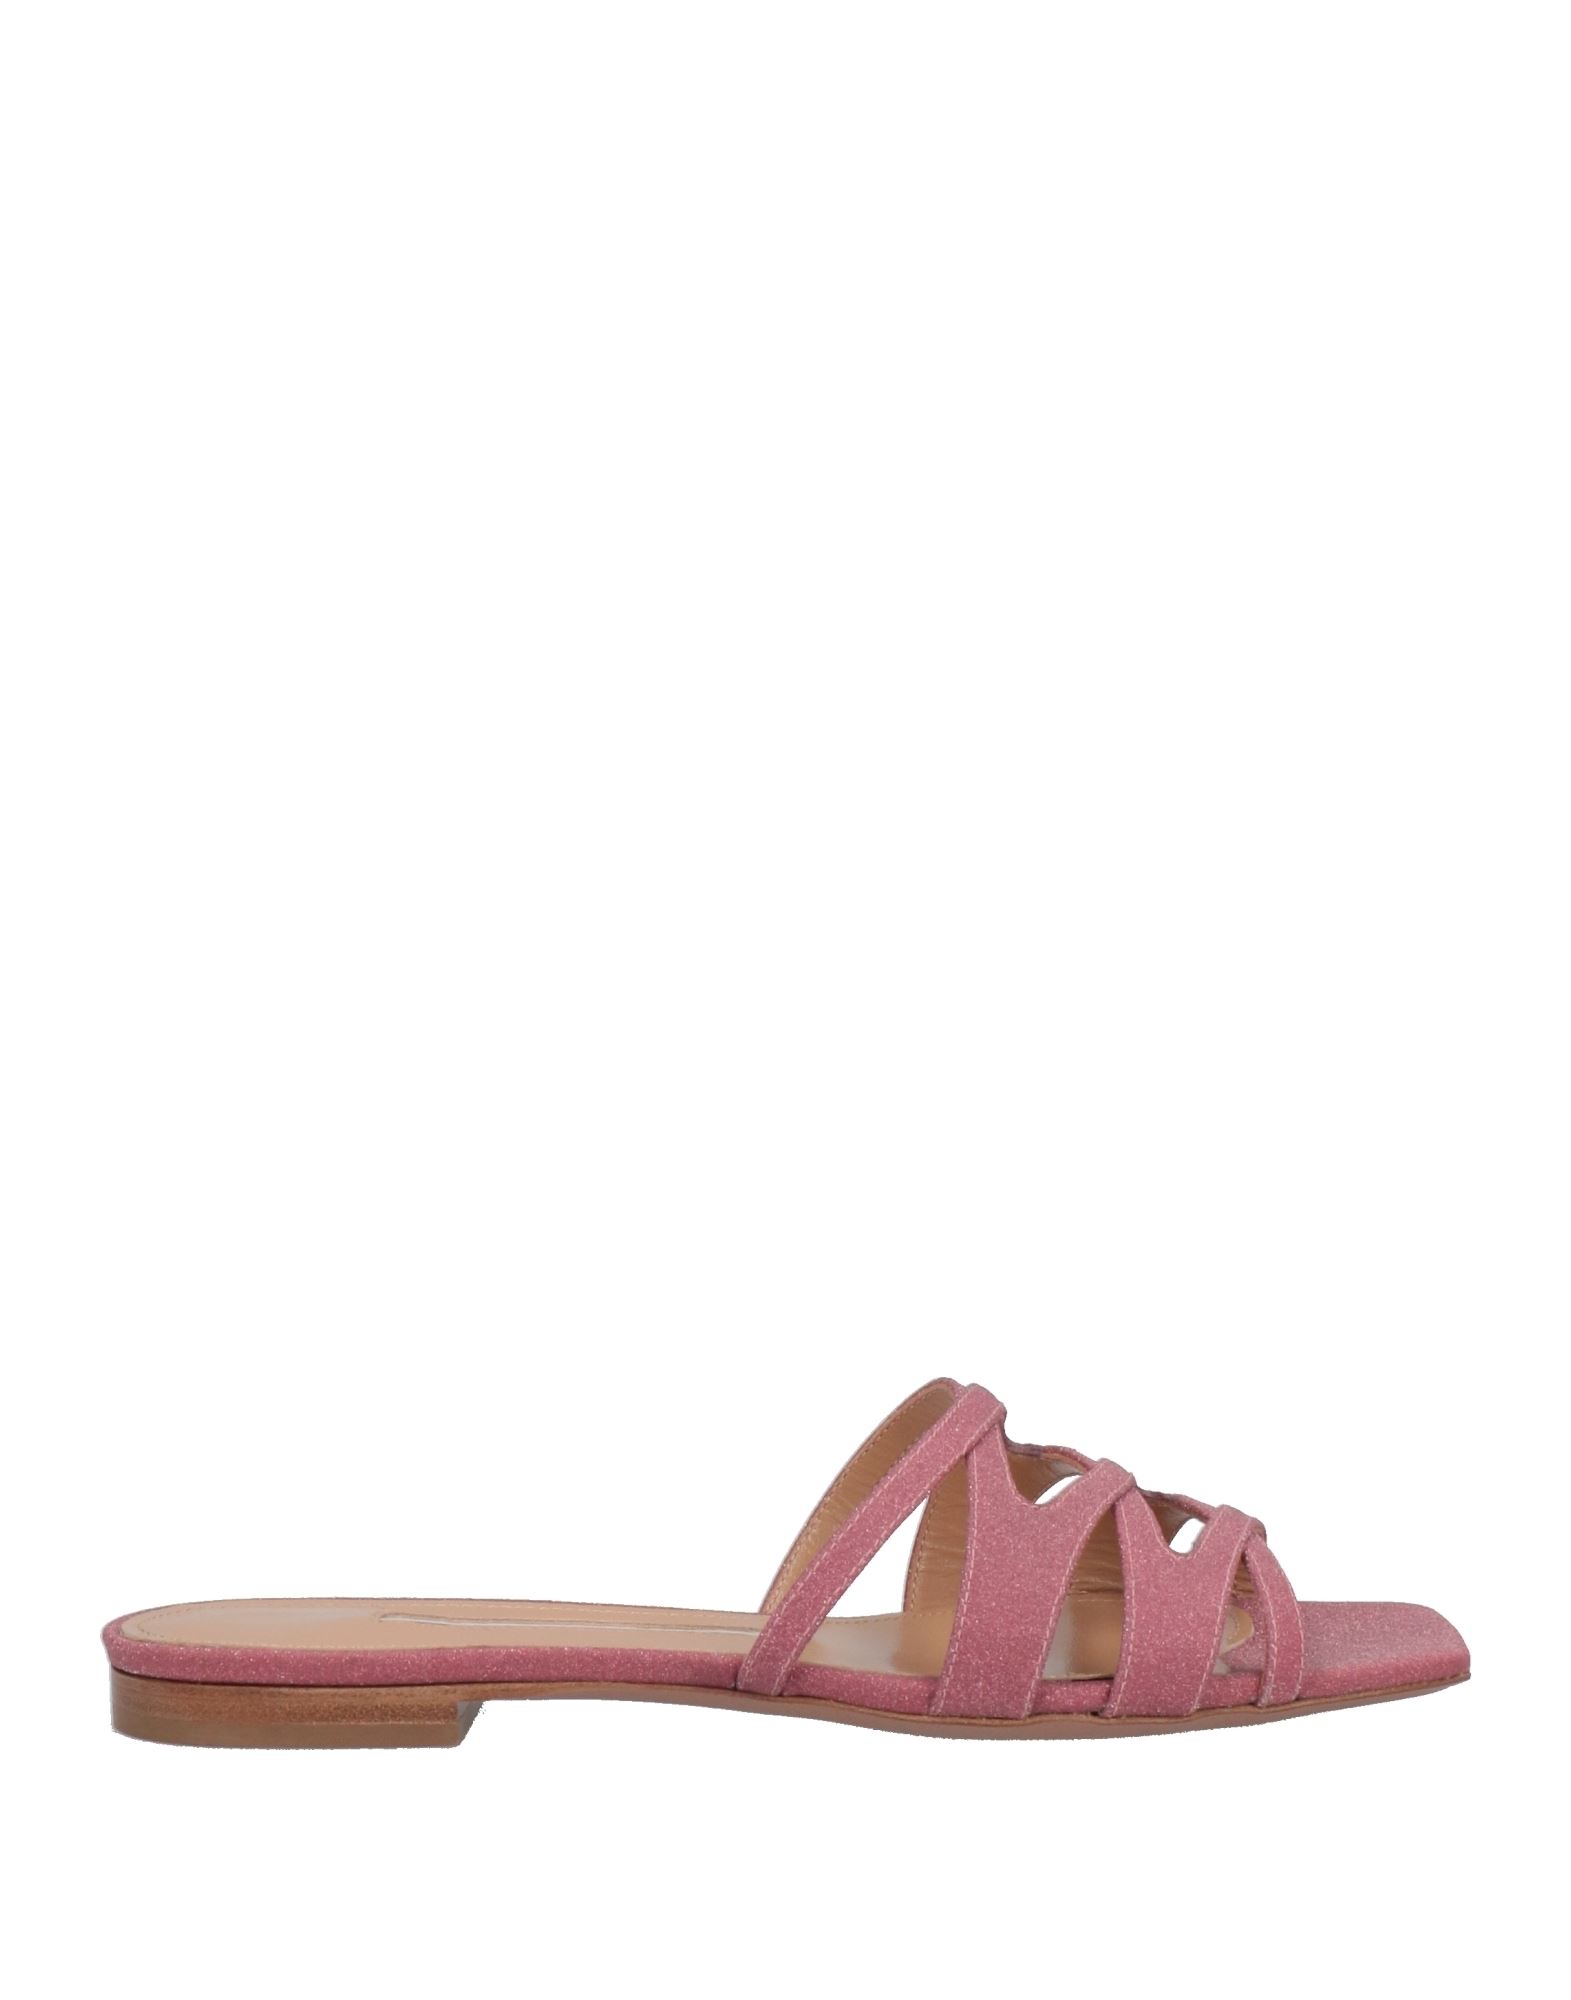 Pellico Sandals In Pink